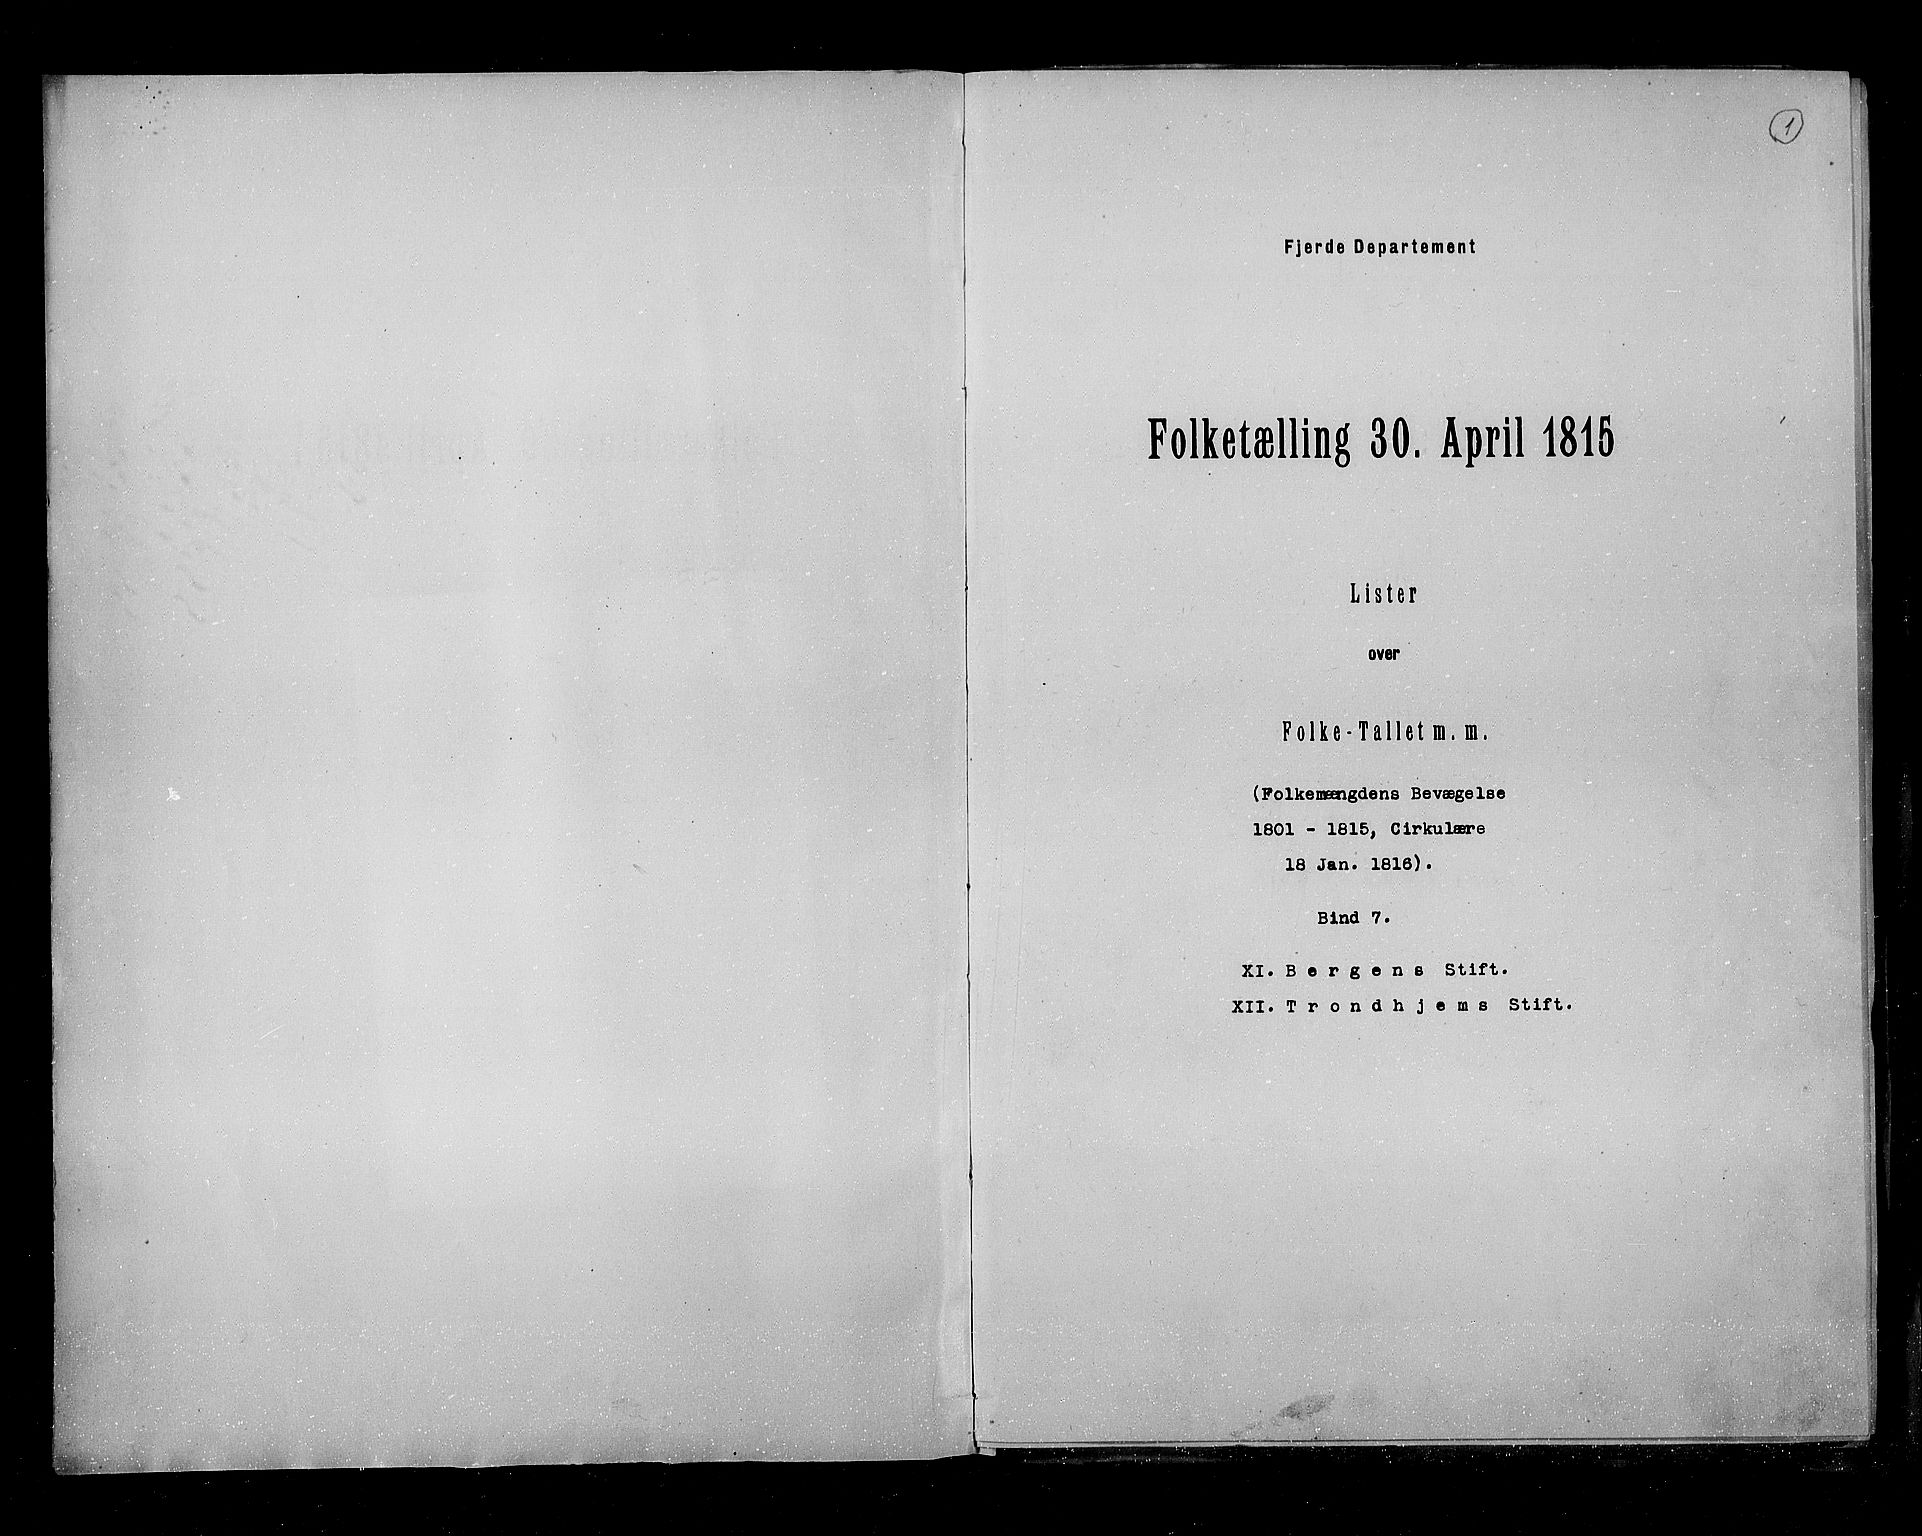 RA, Folketellingen 1815, bind 7: Folkemengdens bevegelse i Bergen stift og Trondheim stift, 1815, s. 1